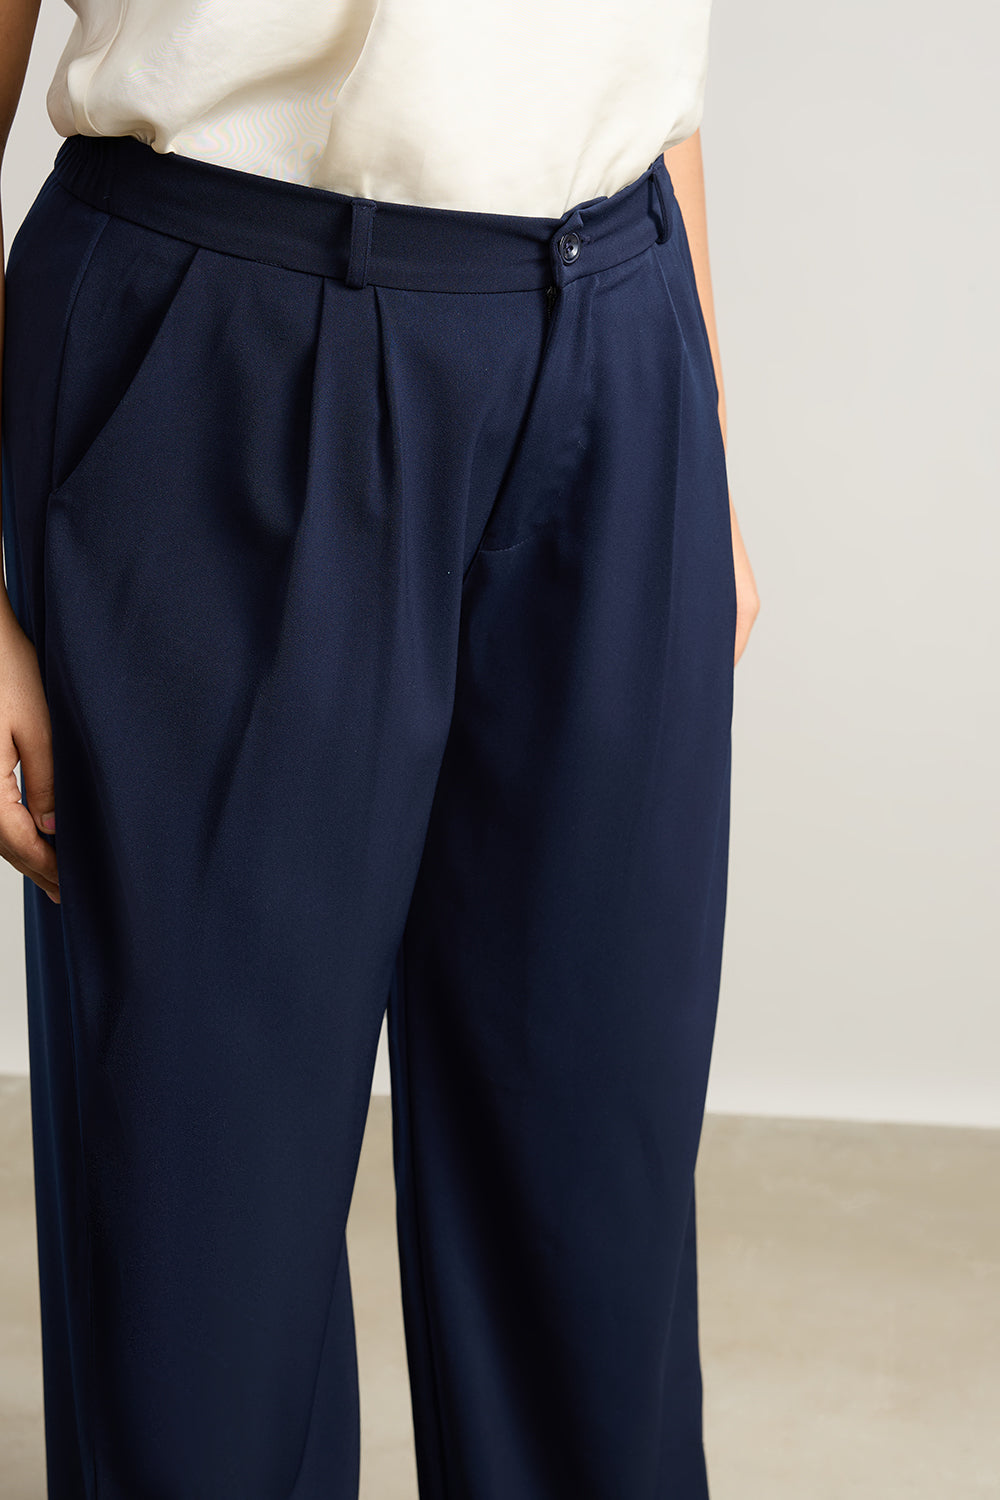 Women's Pleated Navy Blue Korean Pant-CURVE